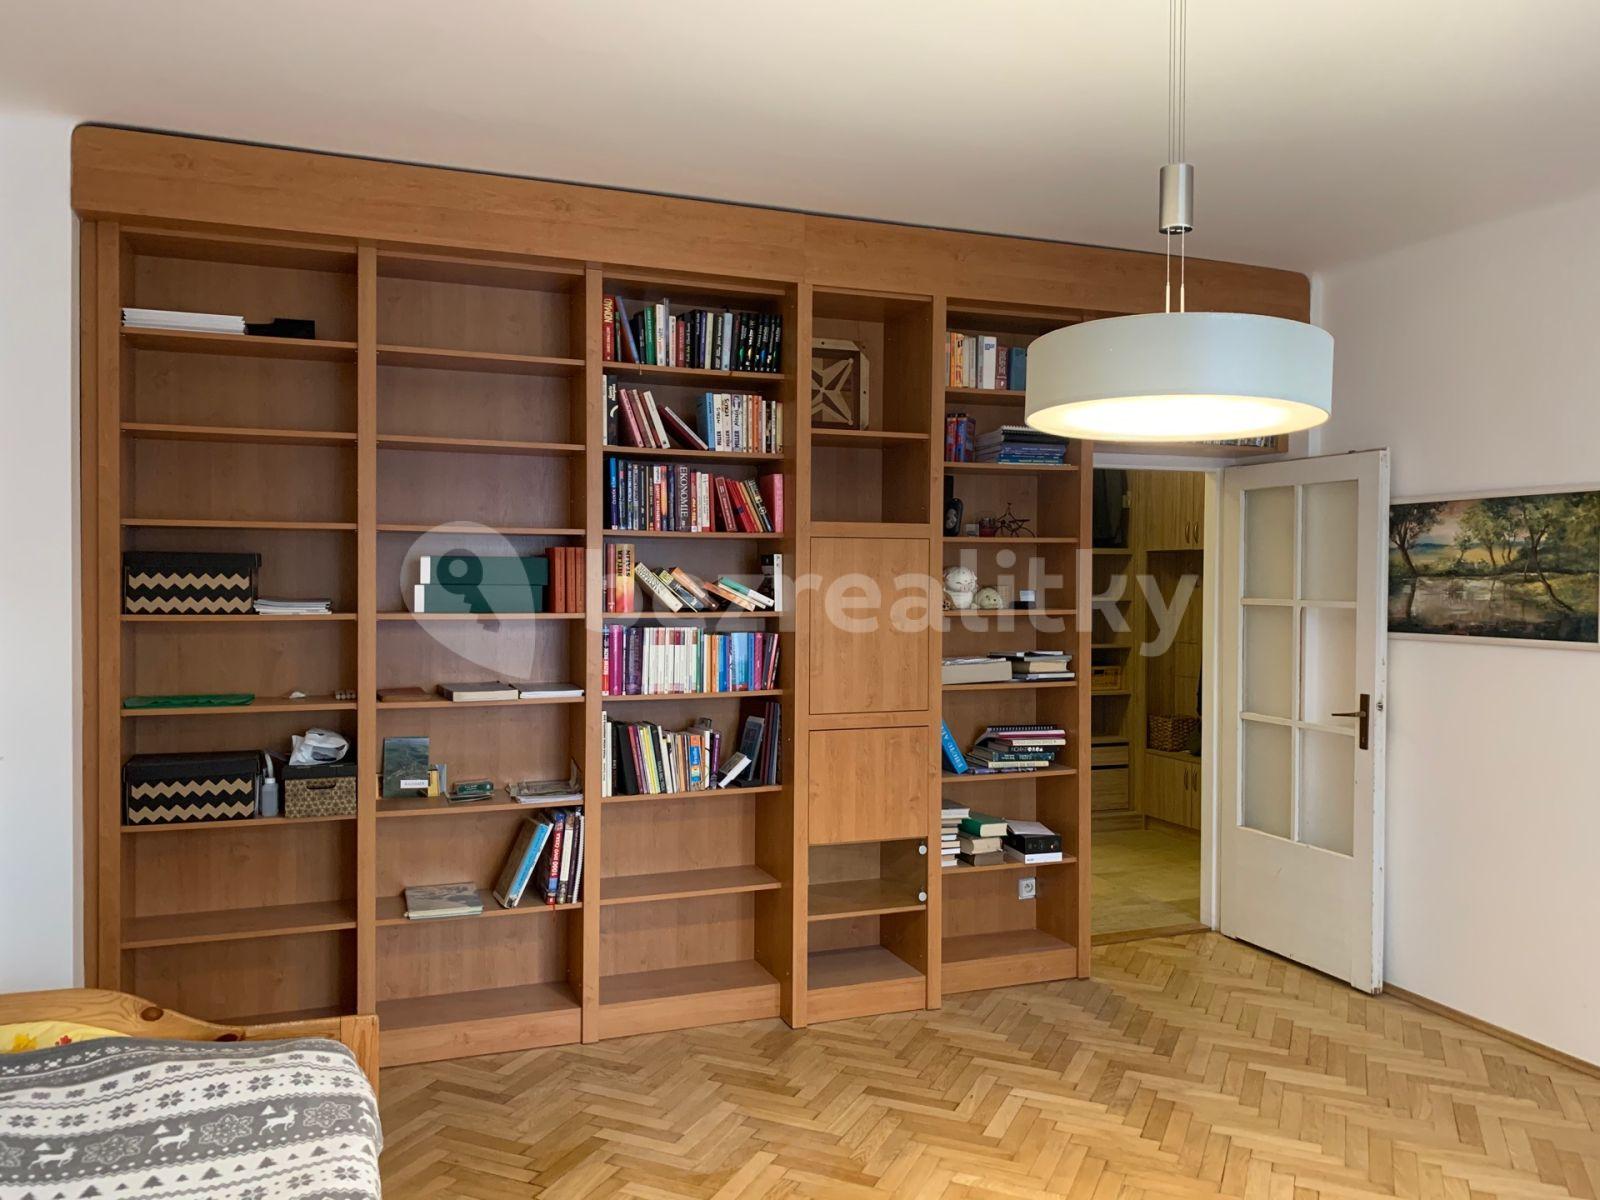 2 bedroom flat to rent, 83 m², Ortenovo náměstí, Prague, Prague